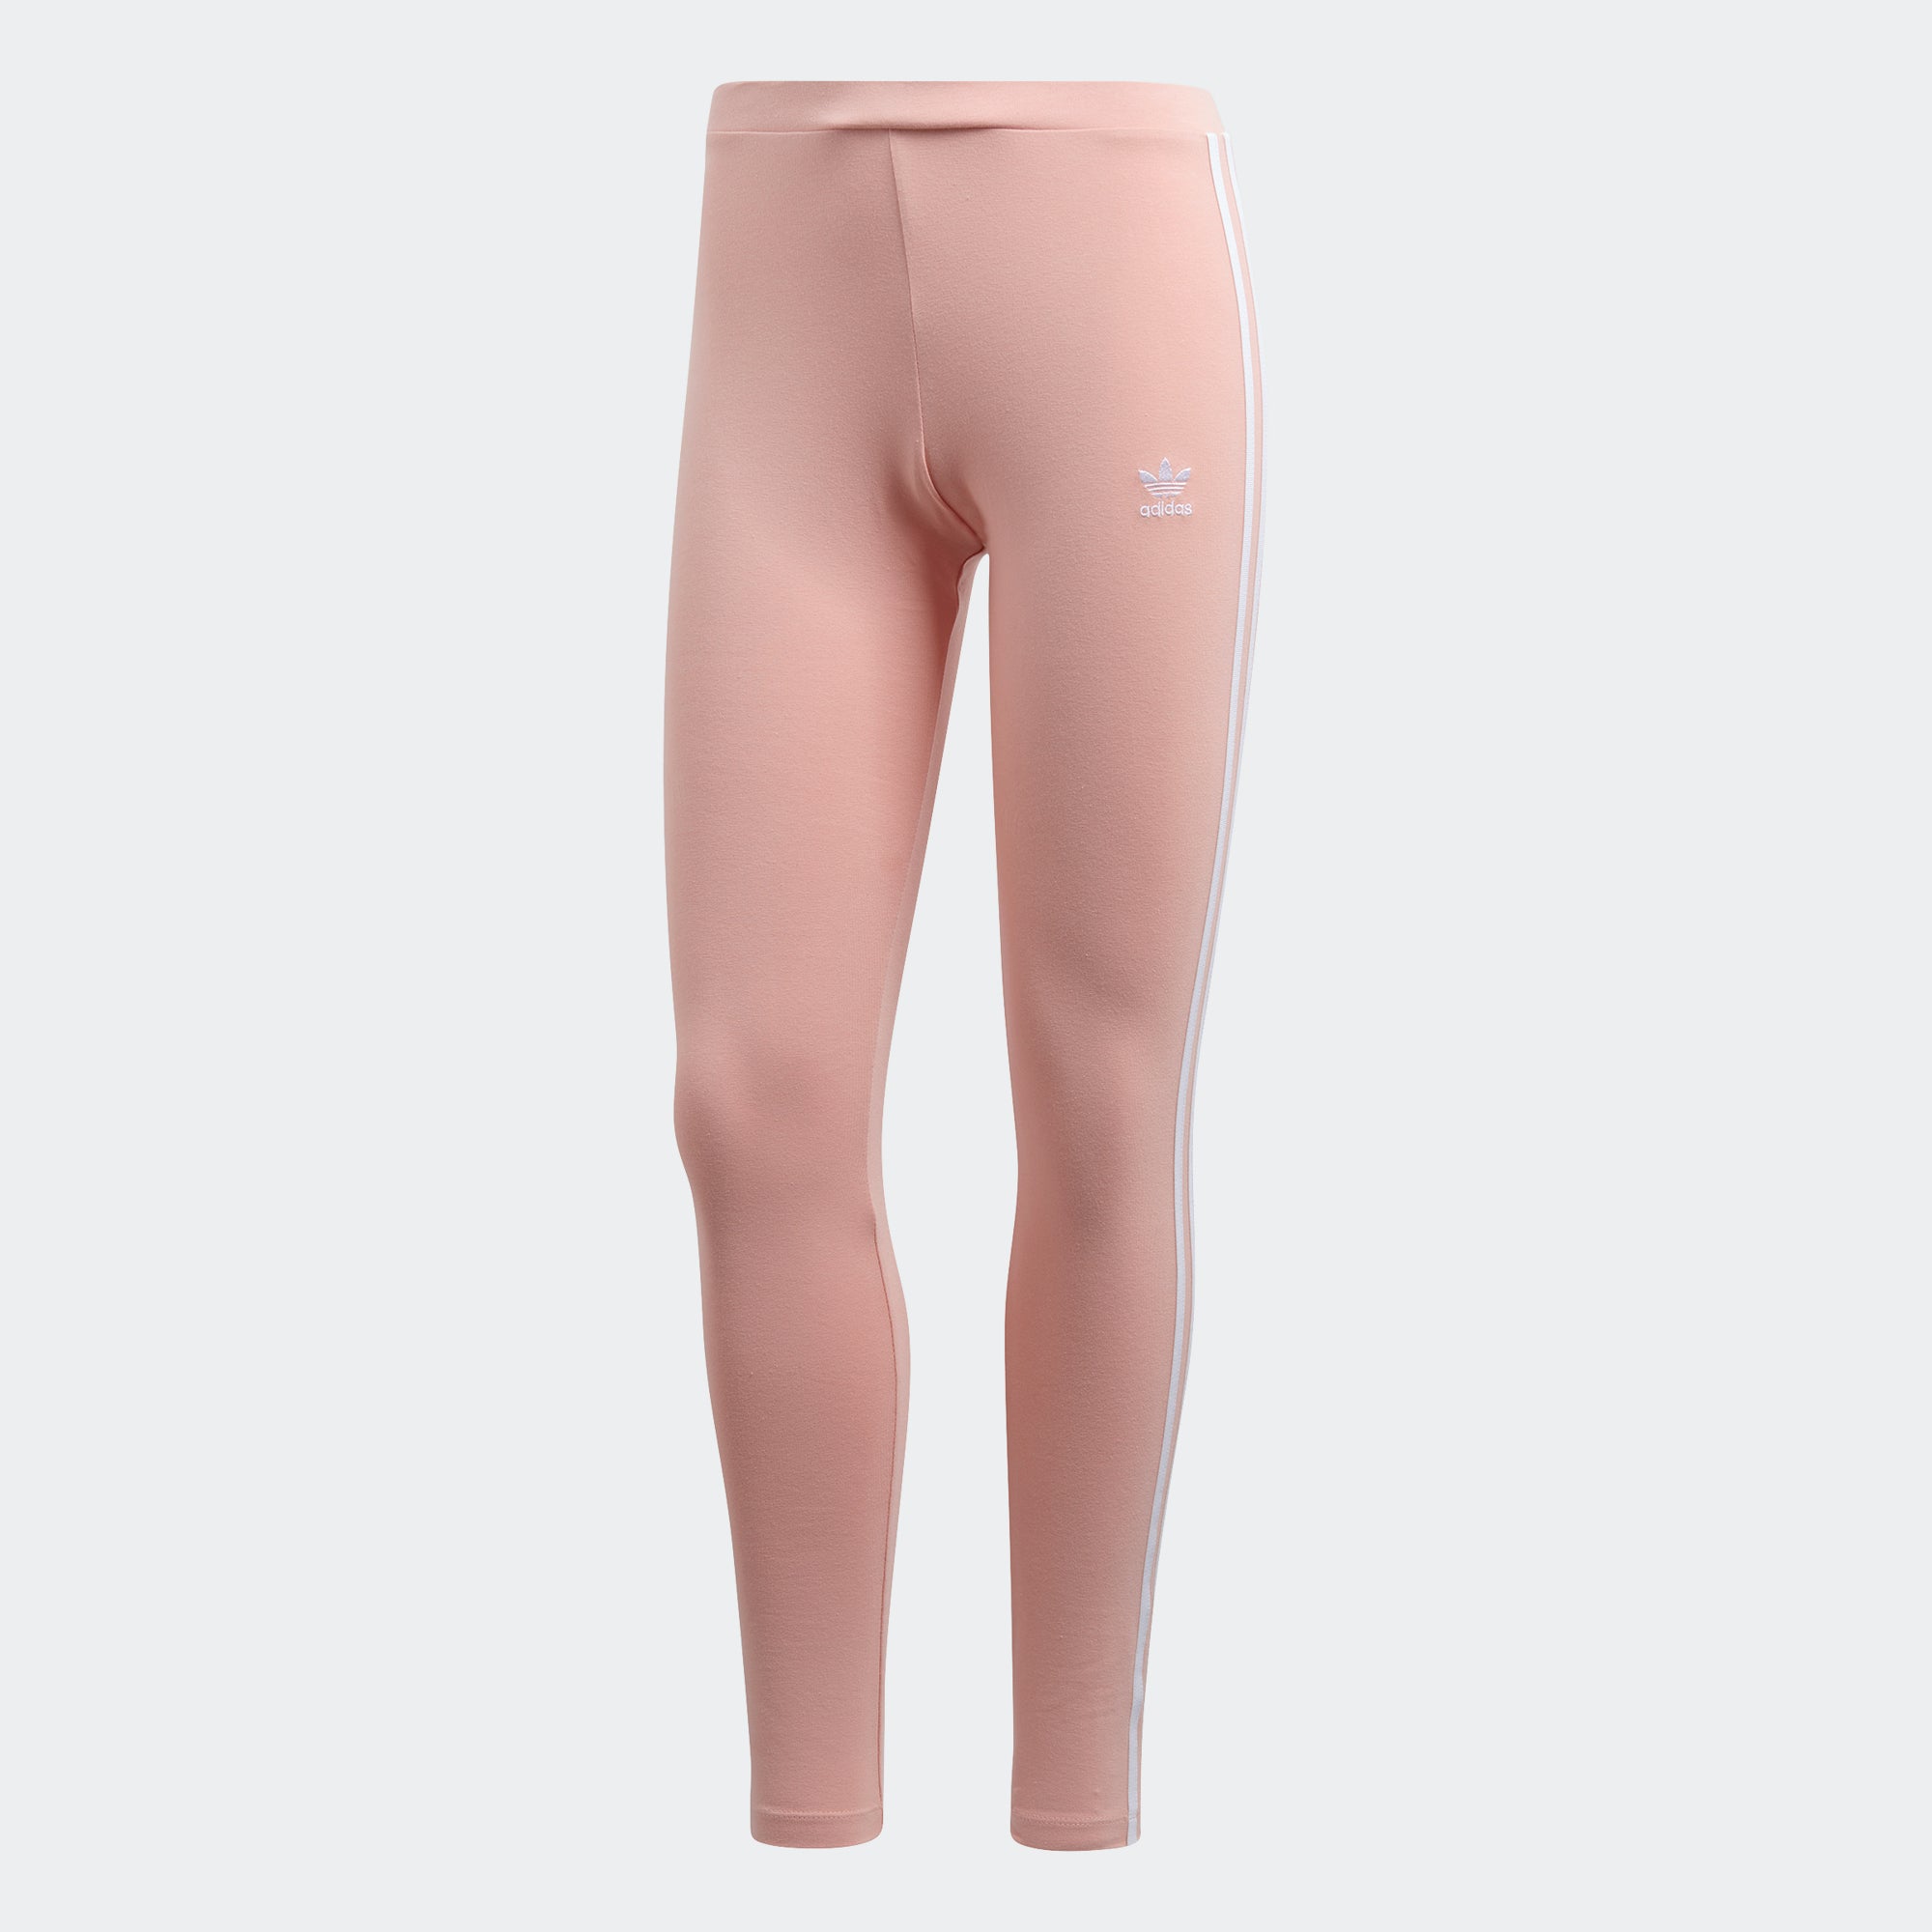 adidas dust pink leggings